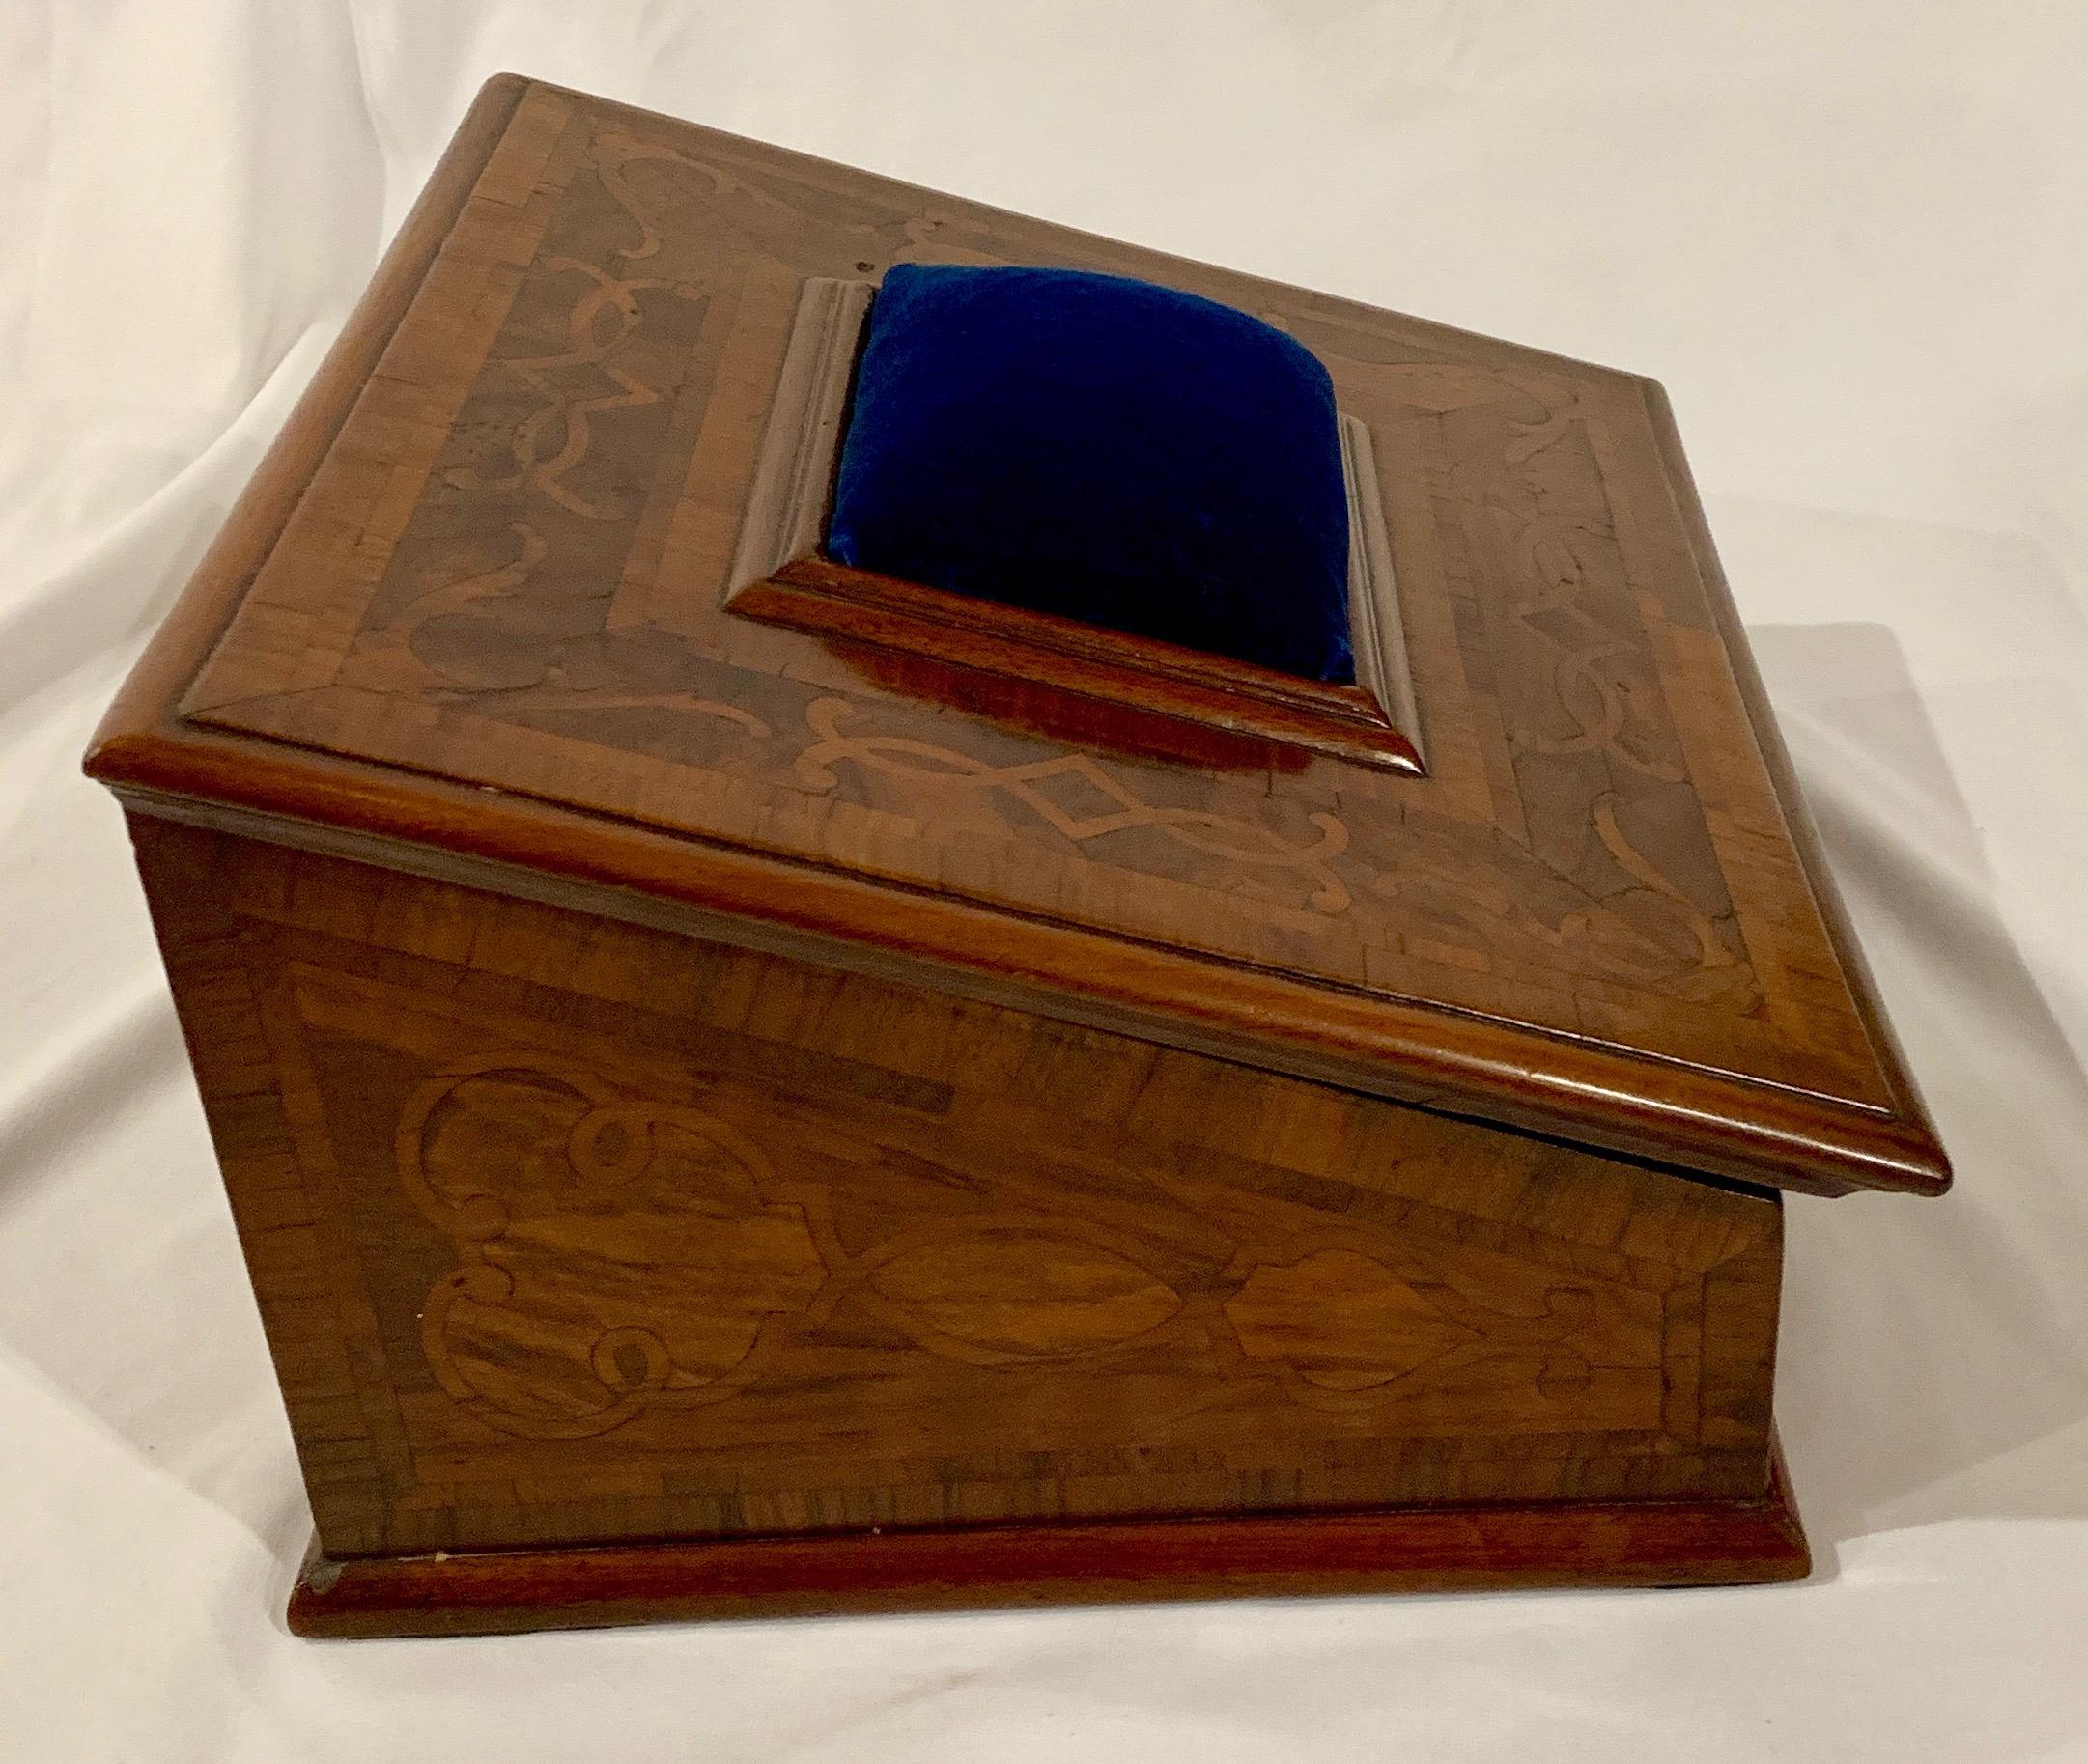 Antique English sewing box or jewel box, circa 1850-1860.
